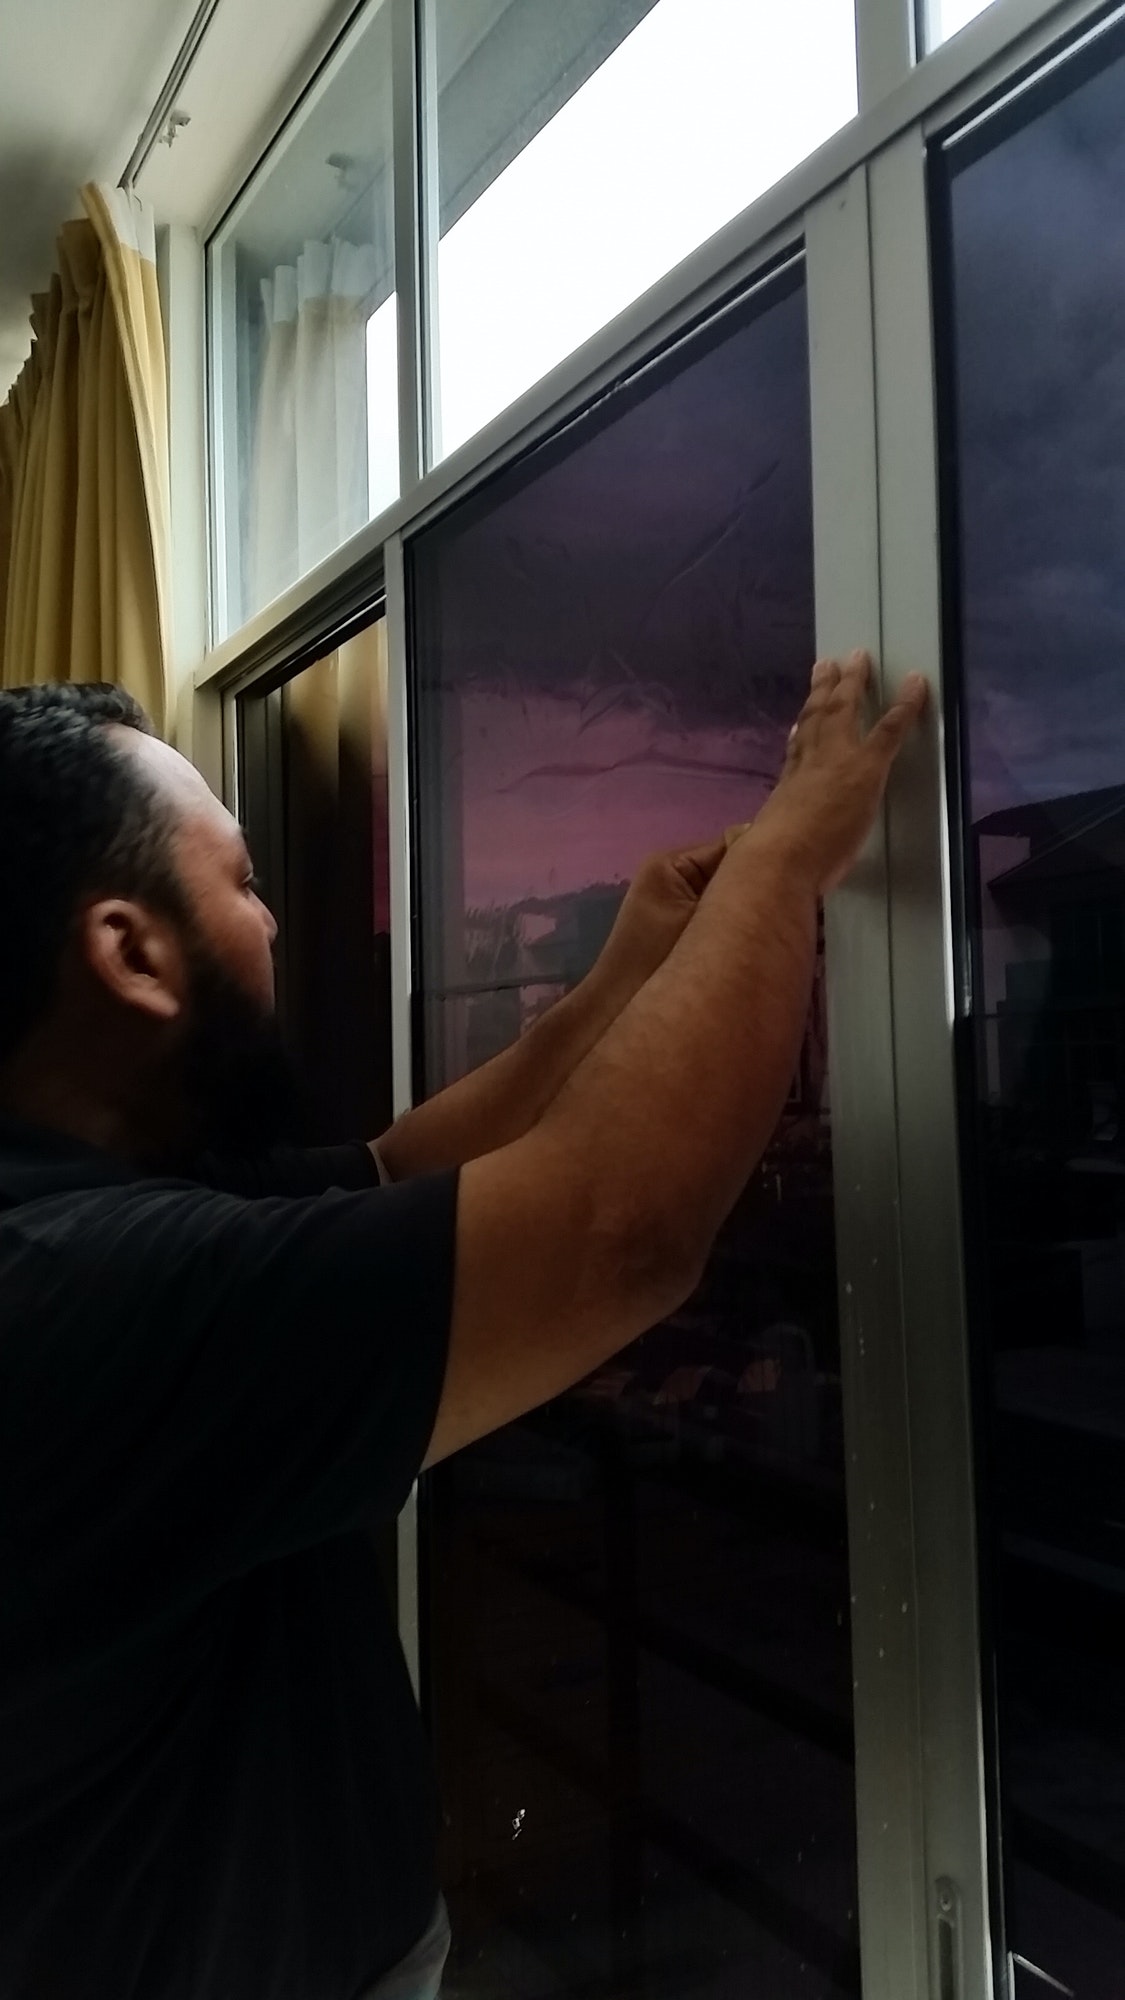 installing windows tinting film to the sliding door